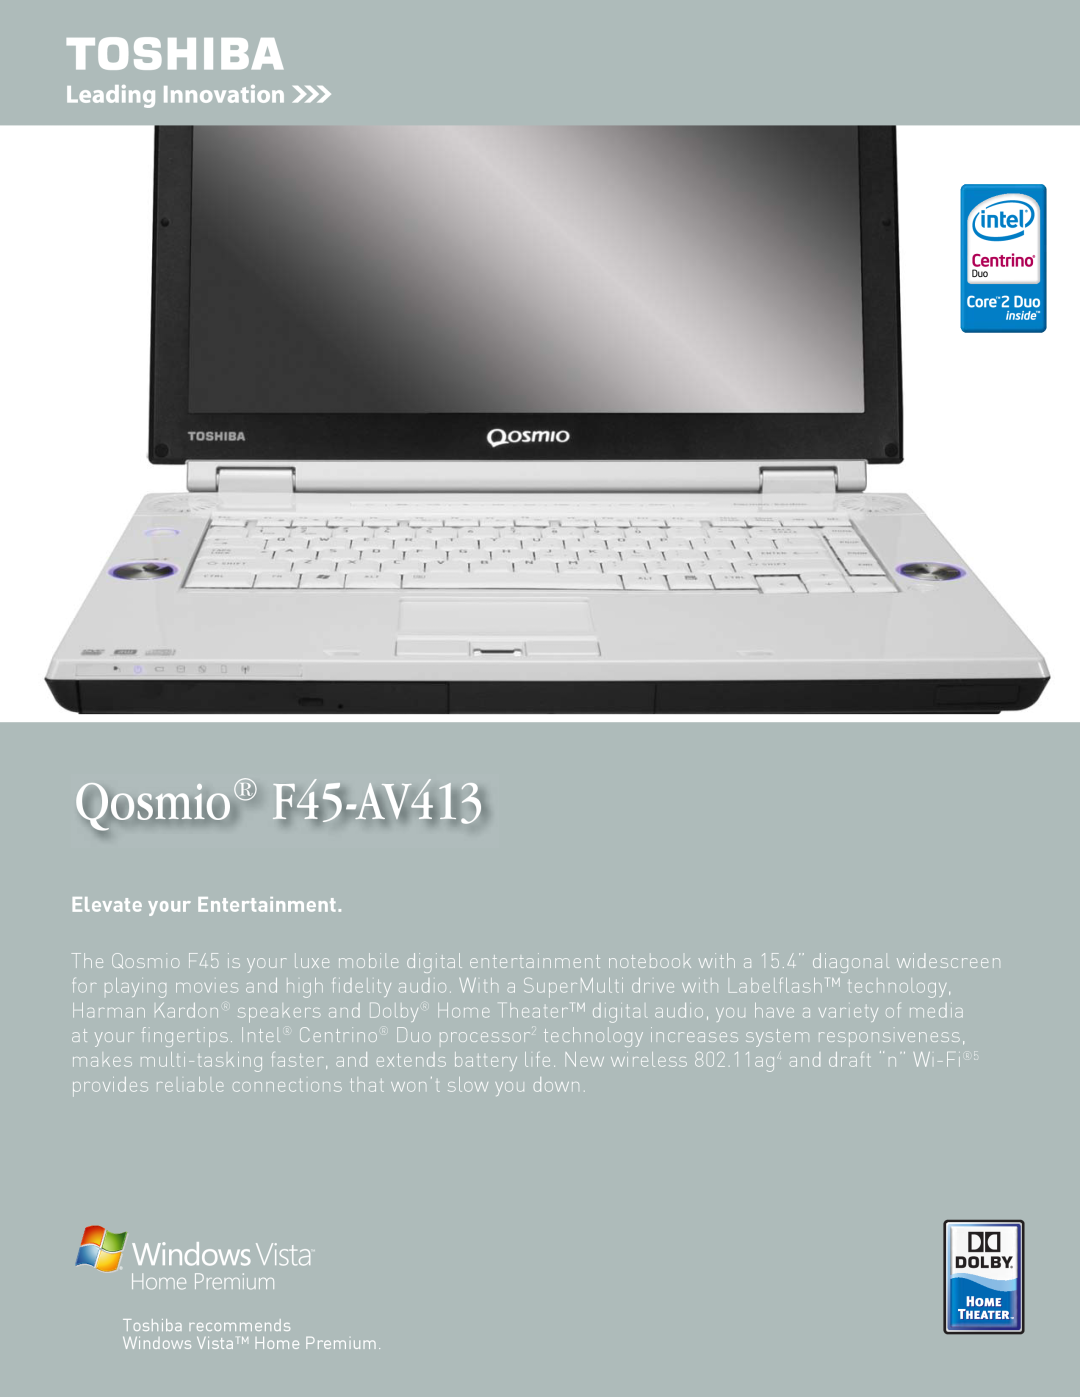 Toshiba manual Qosmio F45-AV413, Elevate your Entertainment 